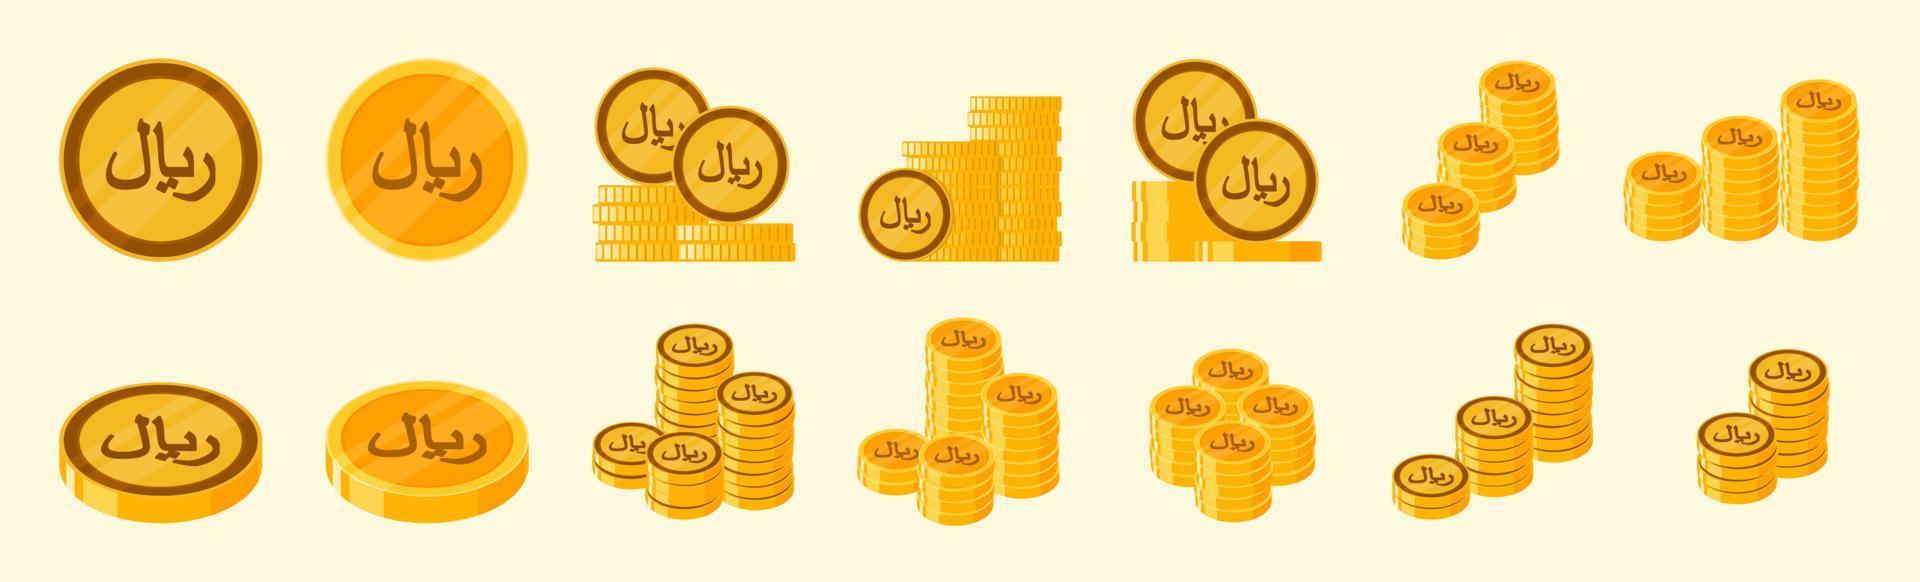 saudi riyal mynt Ikonuppsättning vektor